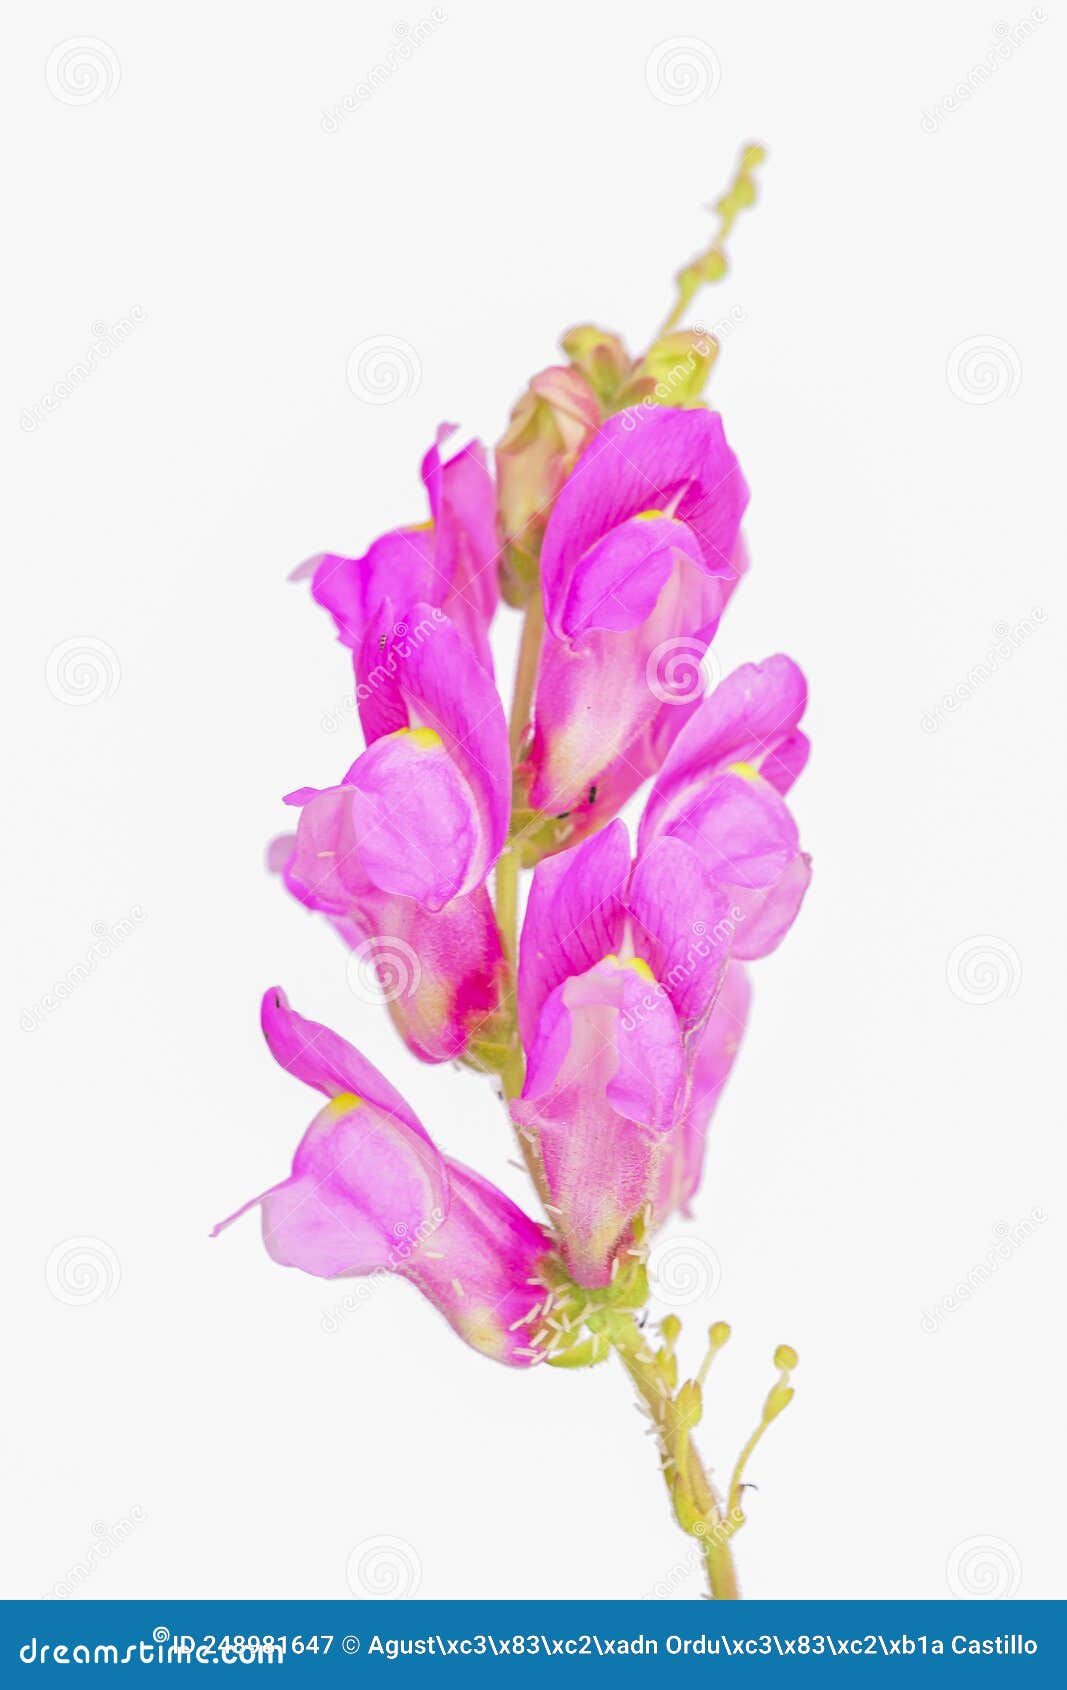 antirrhinum or boca de dragon, a beautiful wild pink flower from southern spain